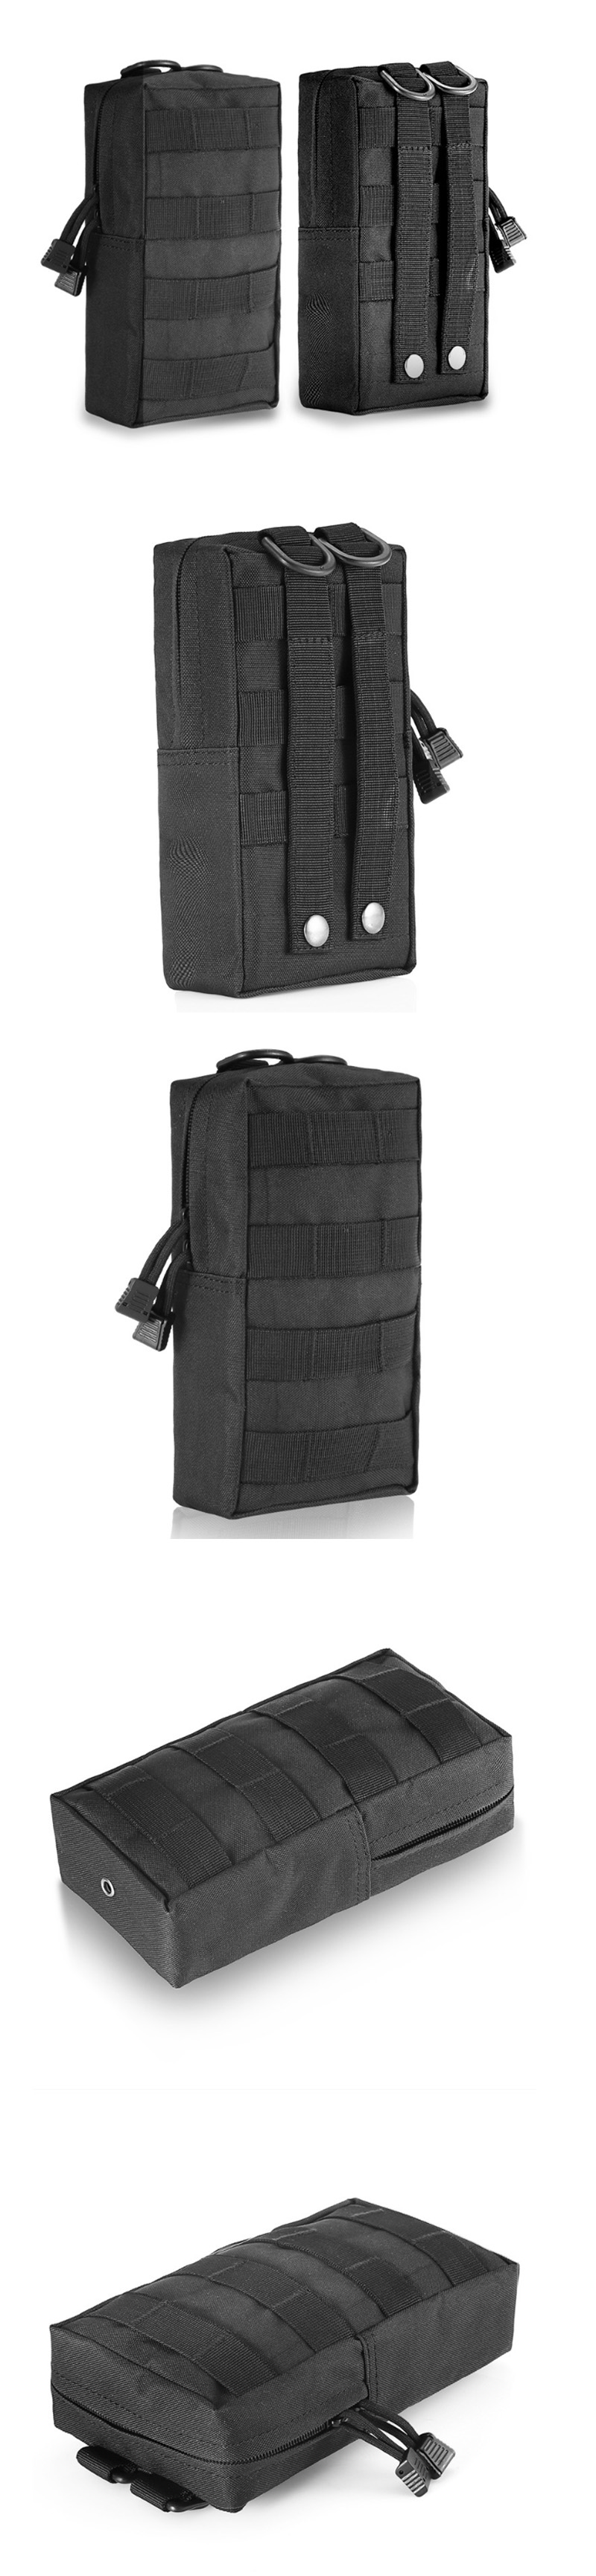 Men-Molle-Tactical-Bag-Accessory-Waist-Bag-Running-Cycling-Phone-Bag-1590498-1